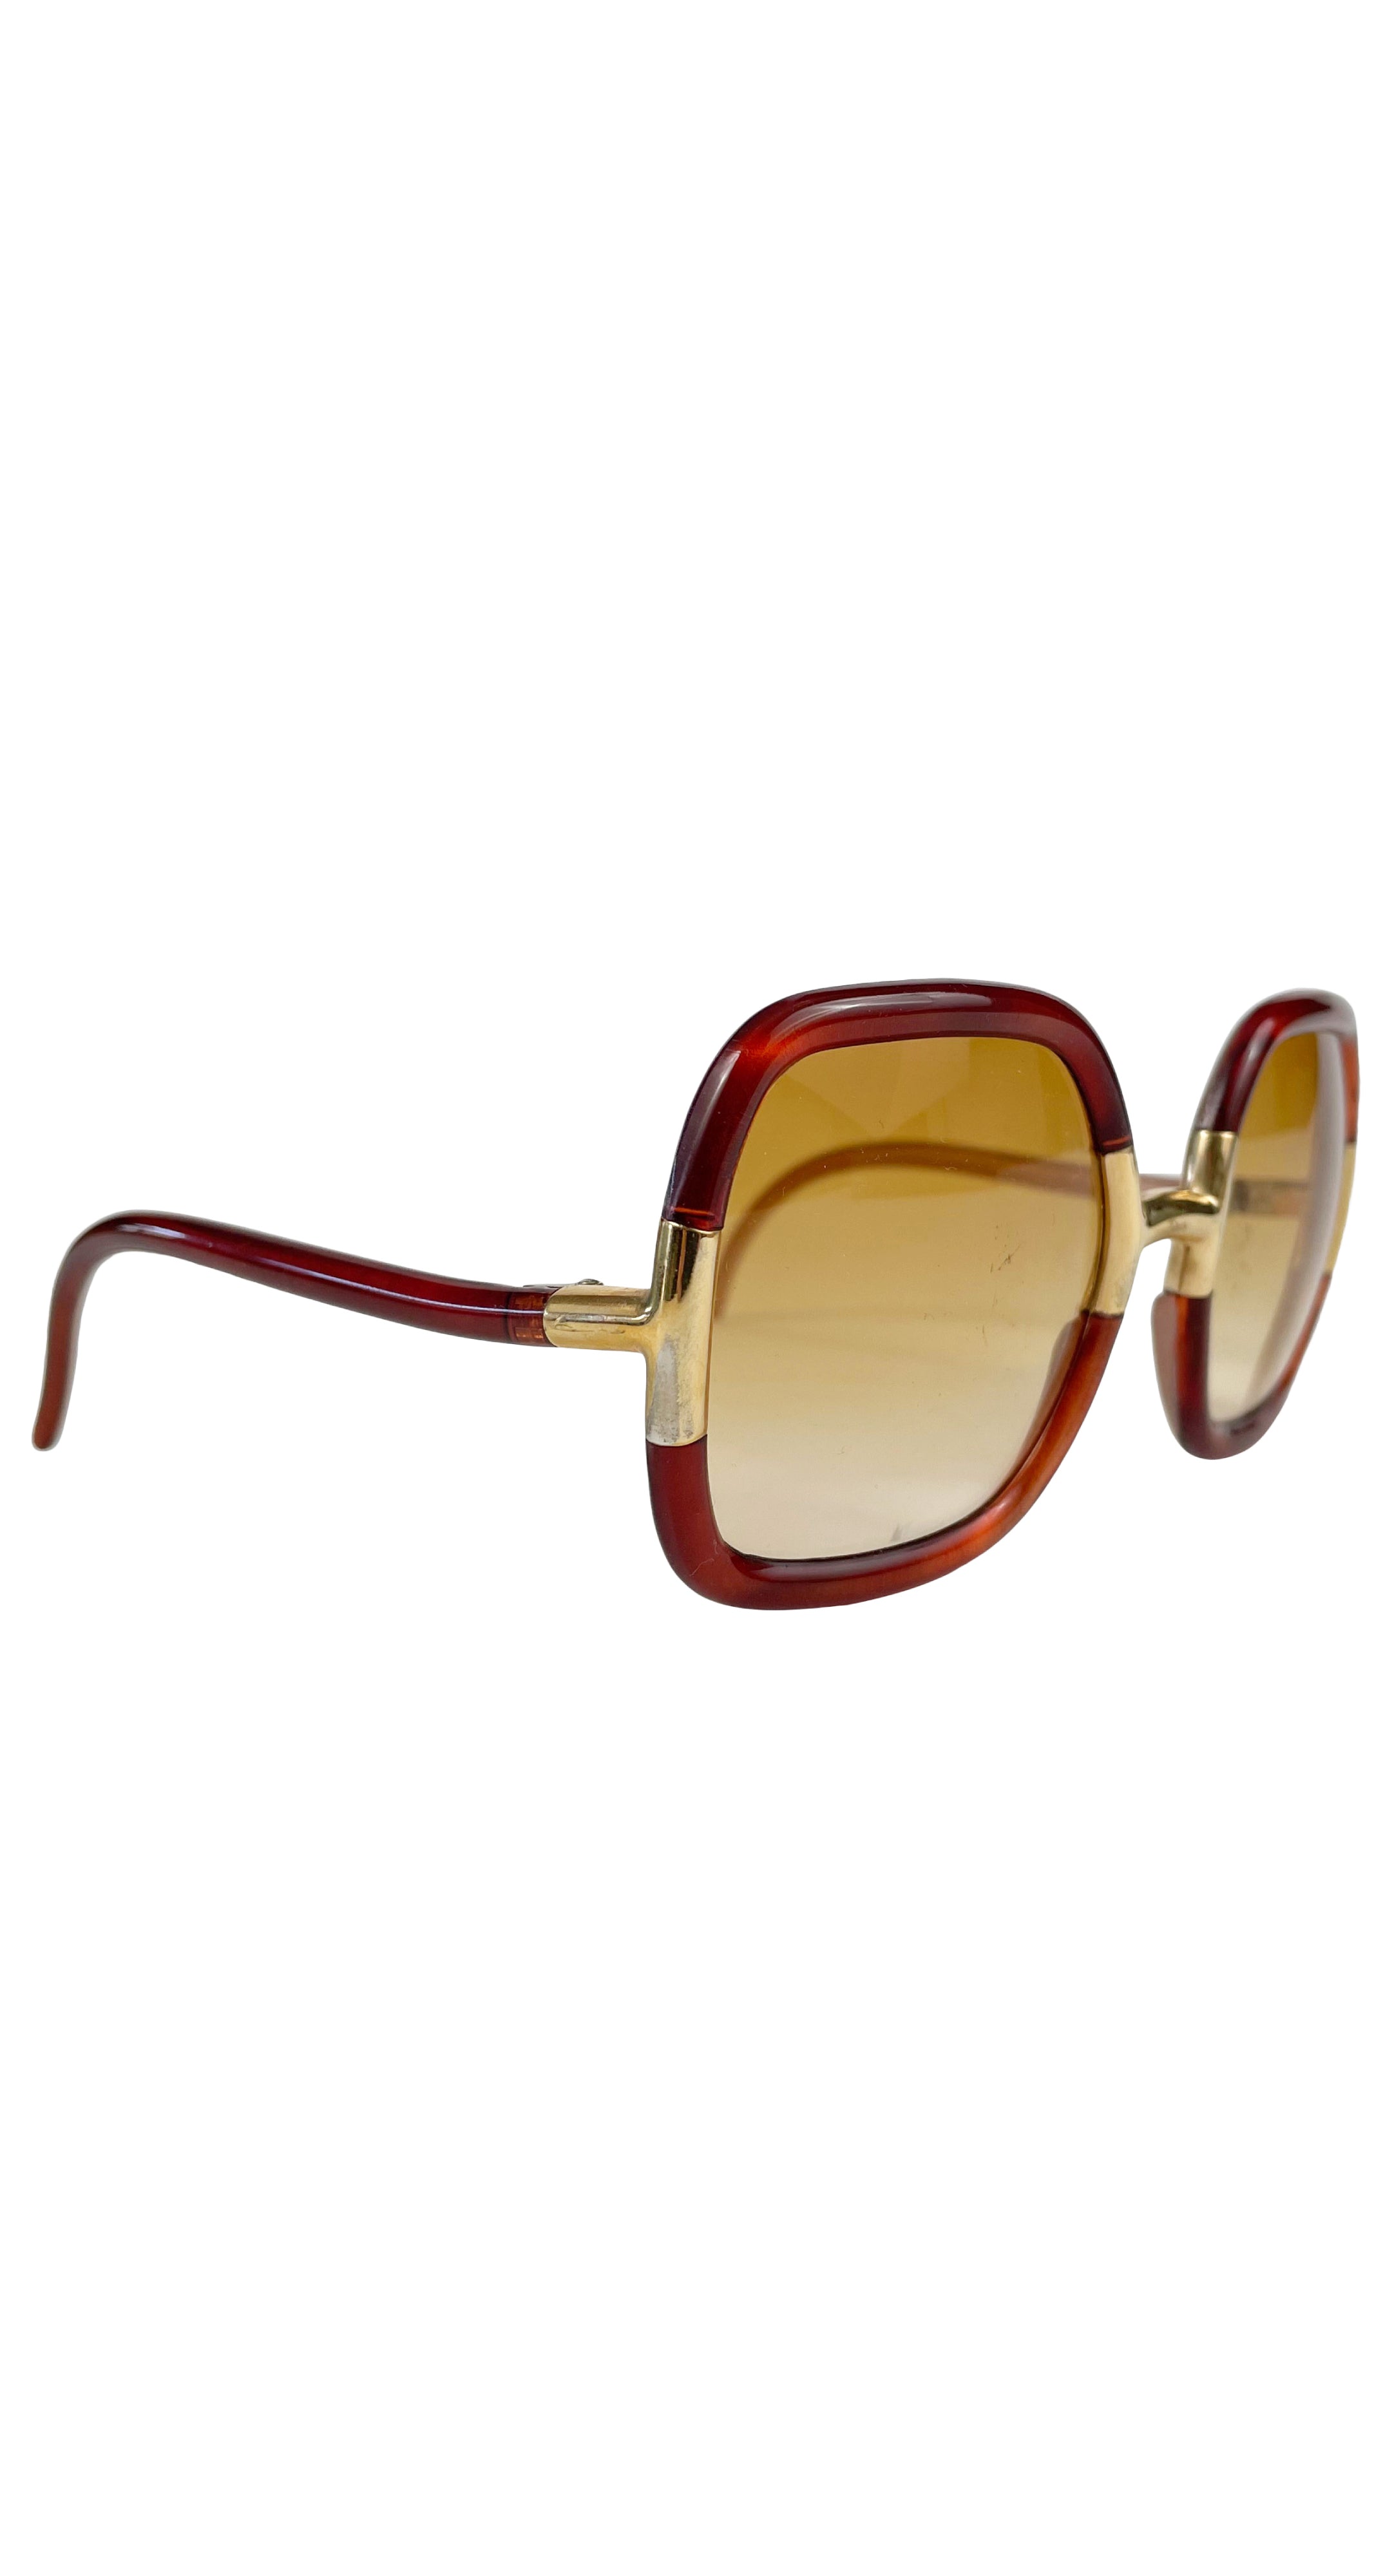 1970s Iconic Gold & Metallic Sienna Oversized Sunglasses